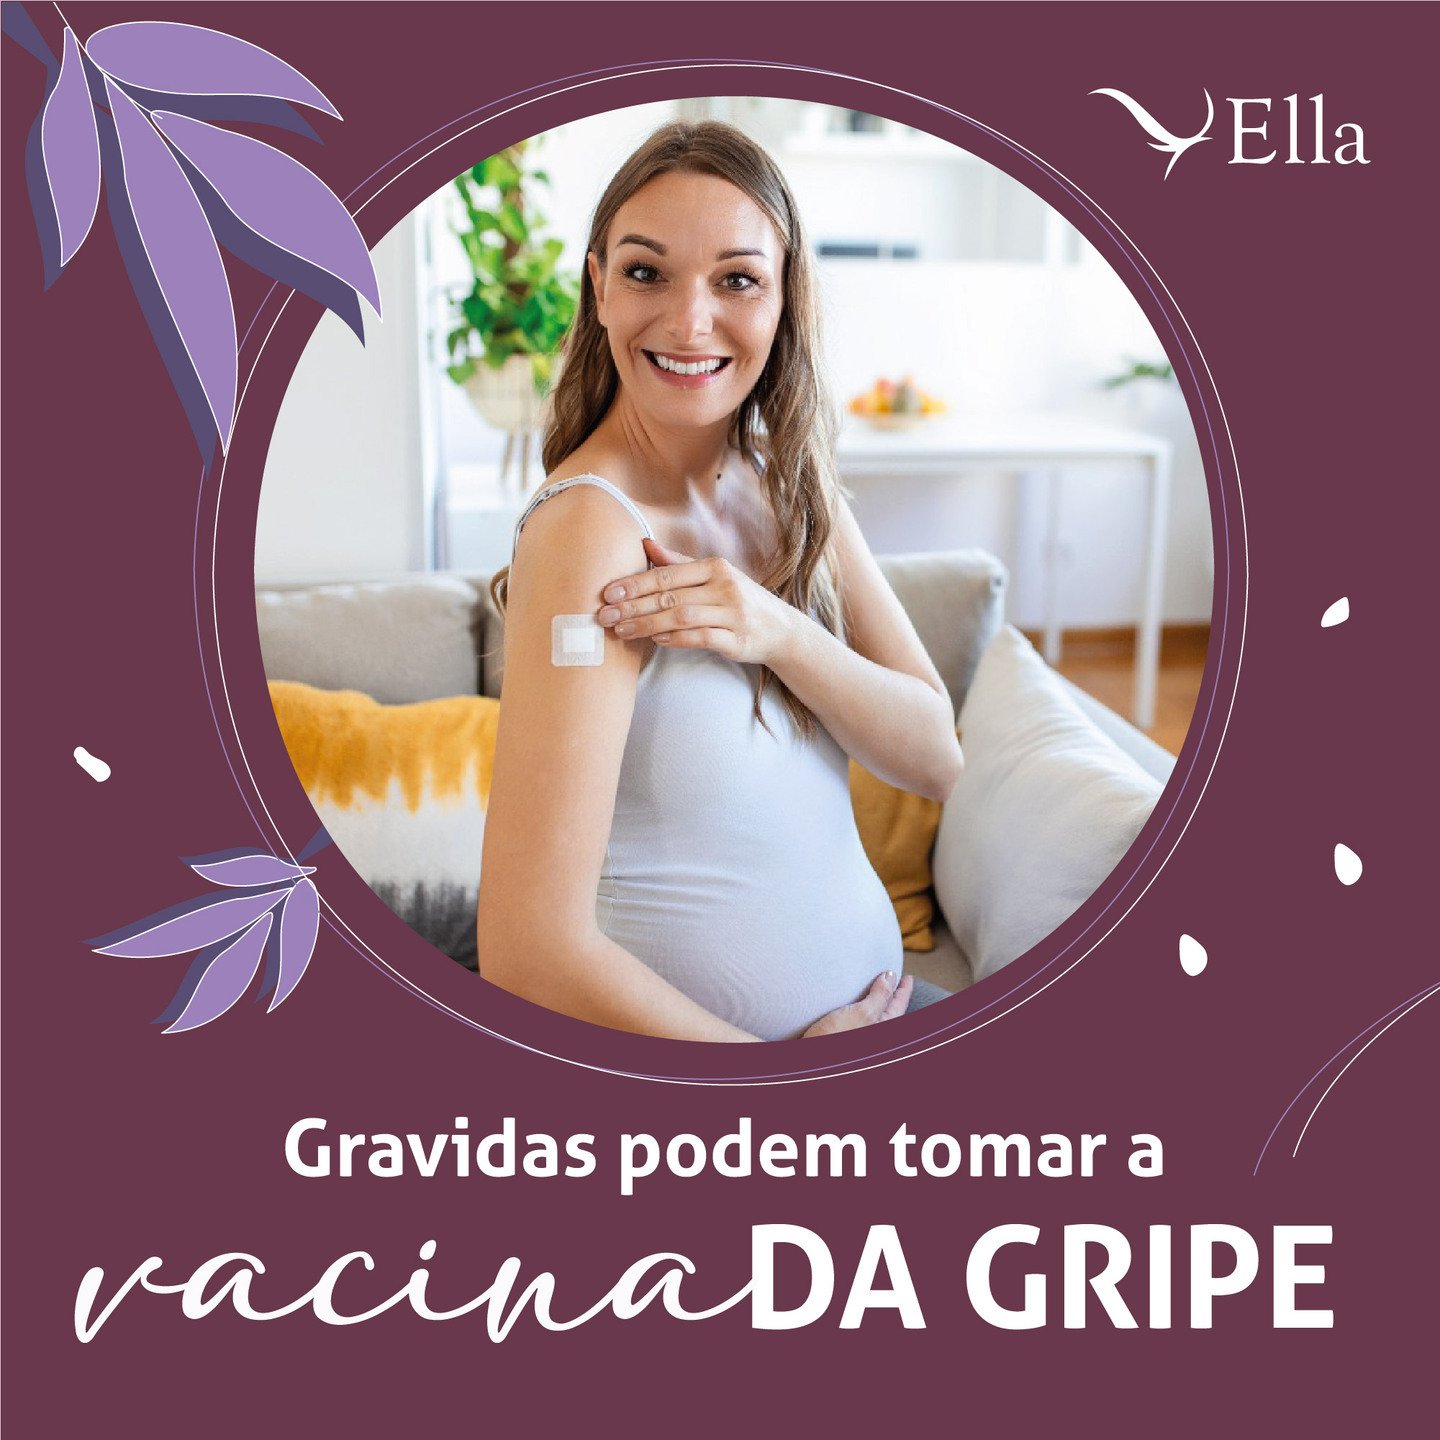 You are currently viewing Gravidas podem tomar a vacina da gripe